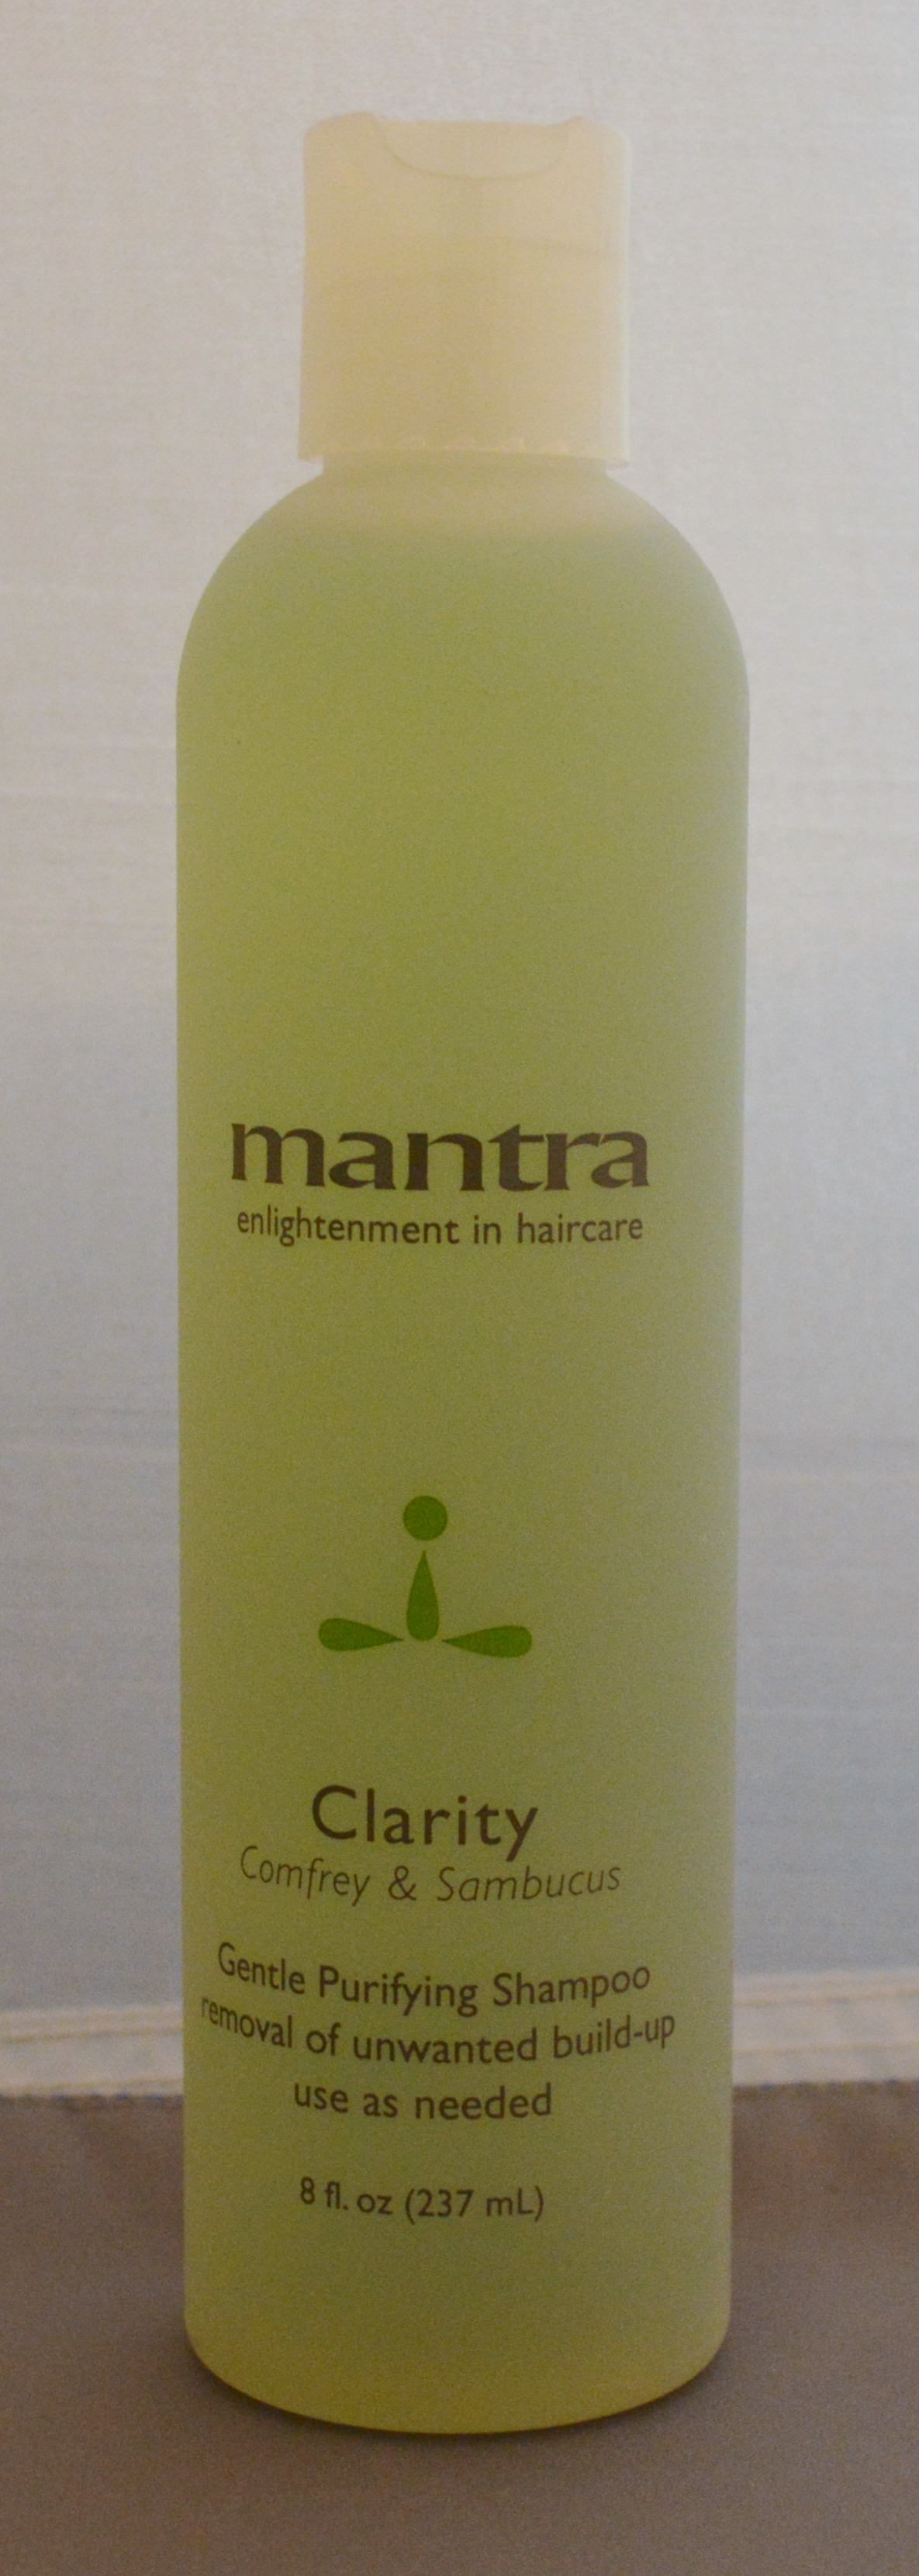 Mantra Clarity Gentle Purifying Shampoo 8 oz